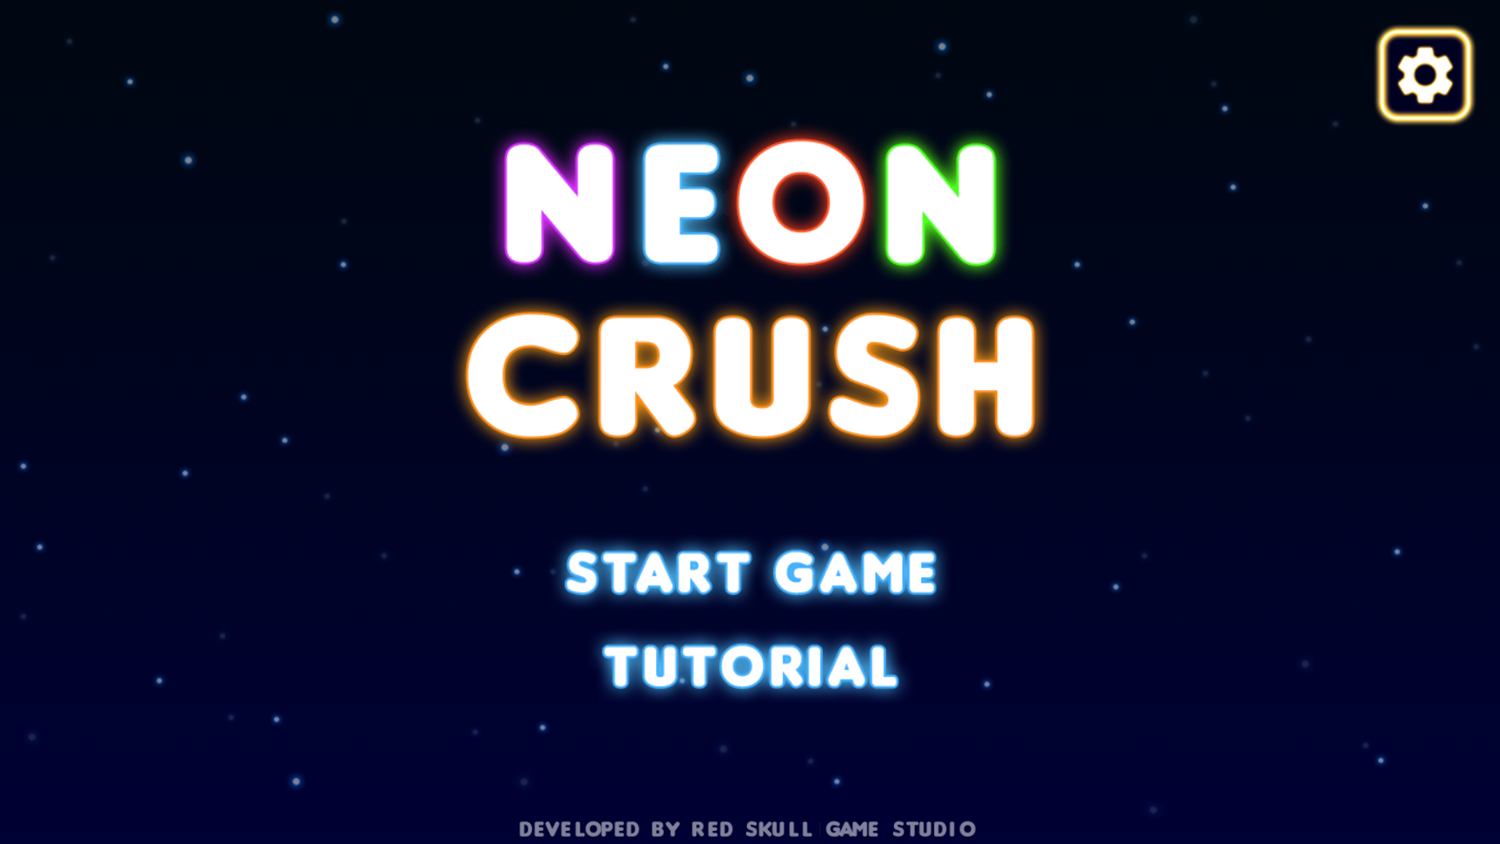 Neon Crush Game Welcome Screen Screenshot.